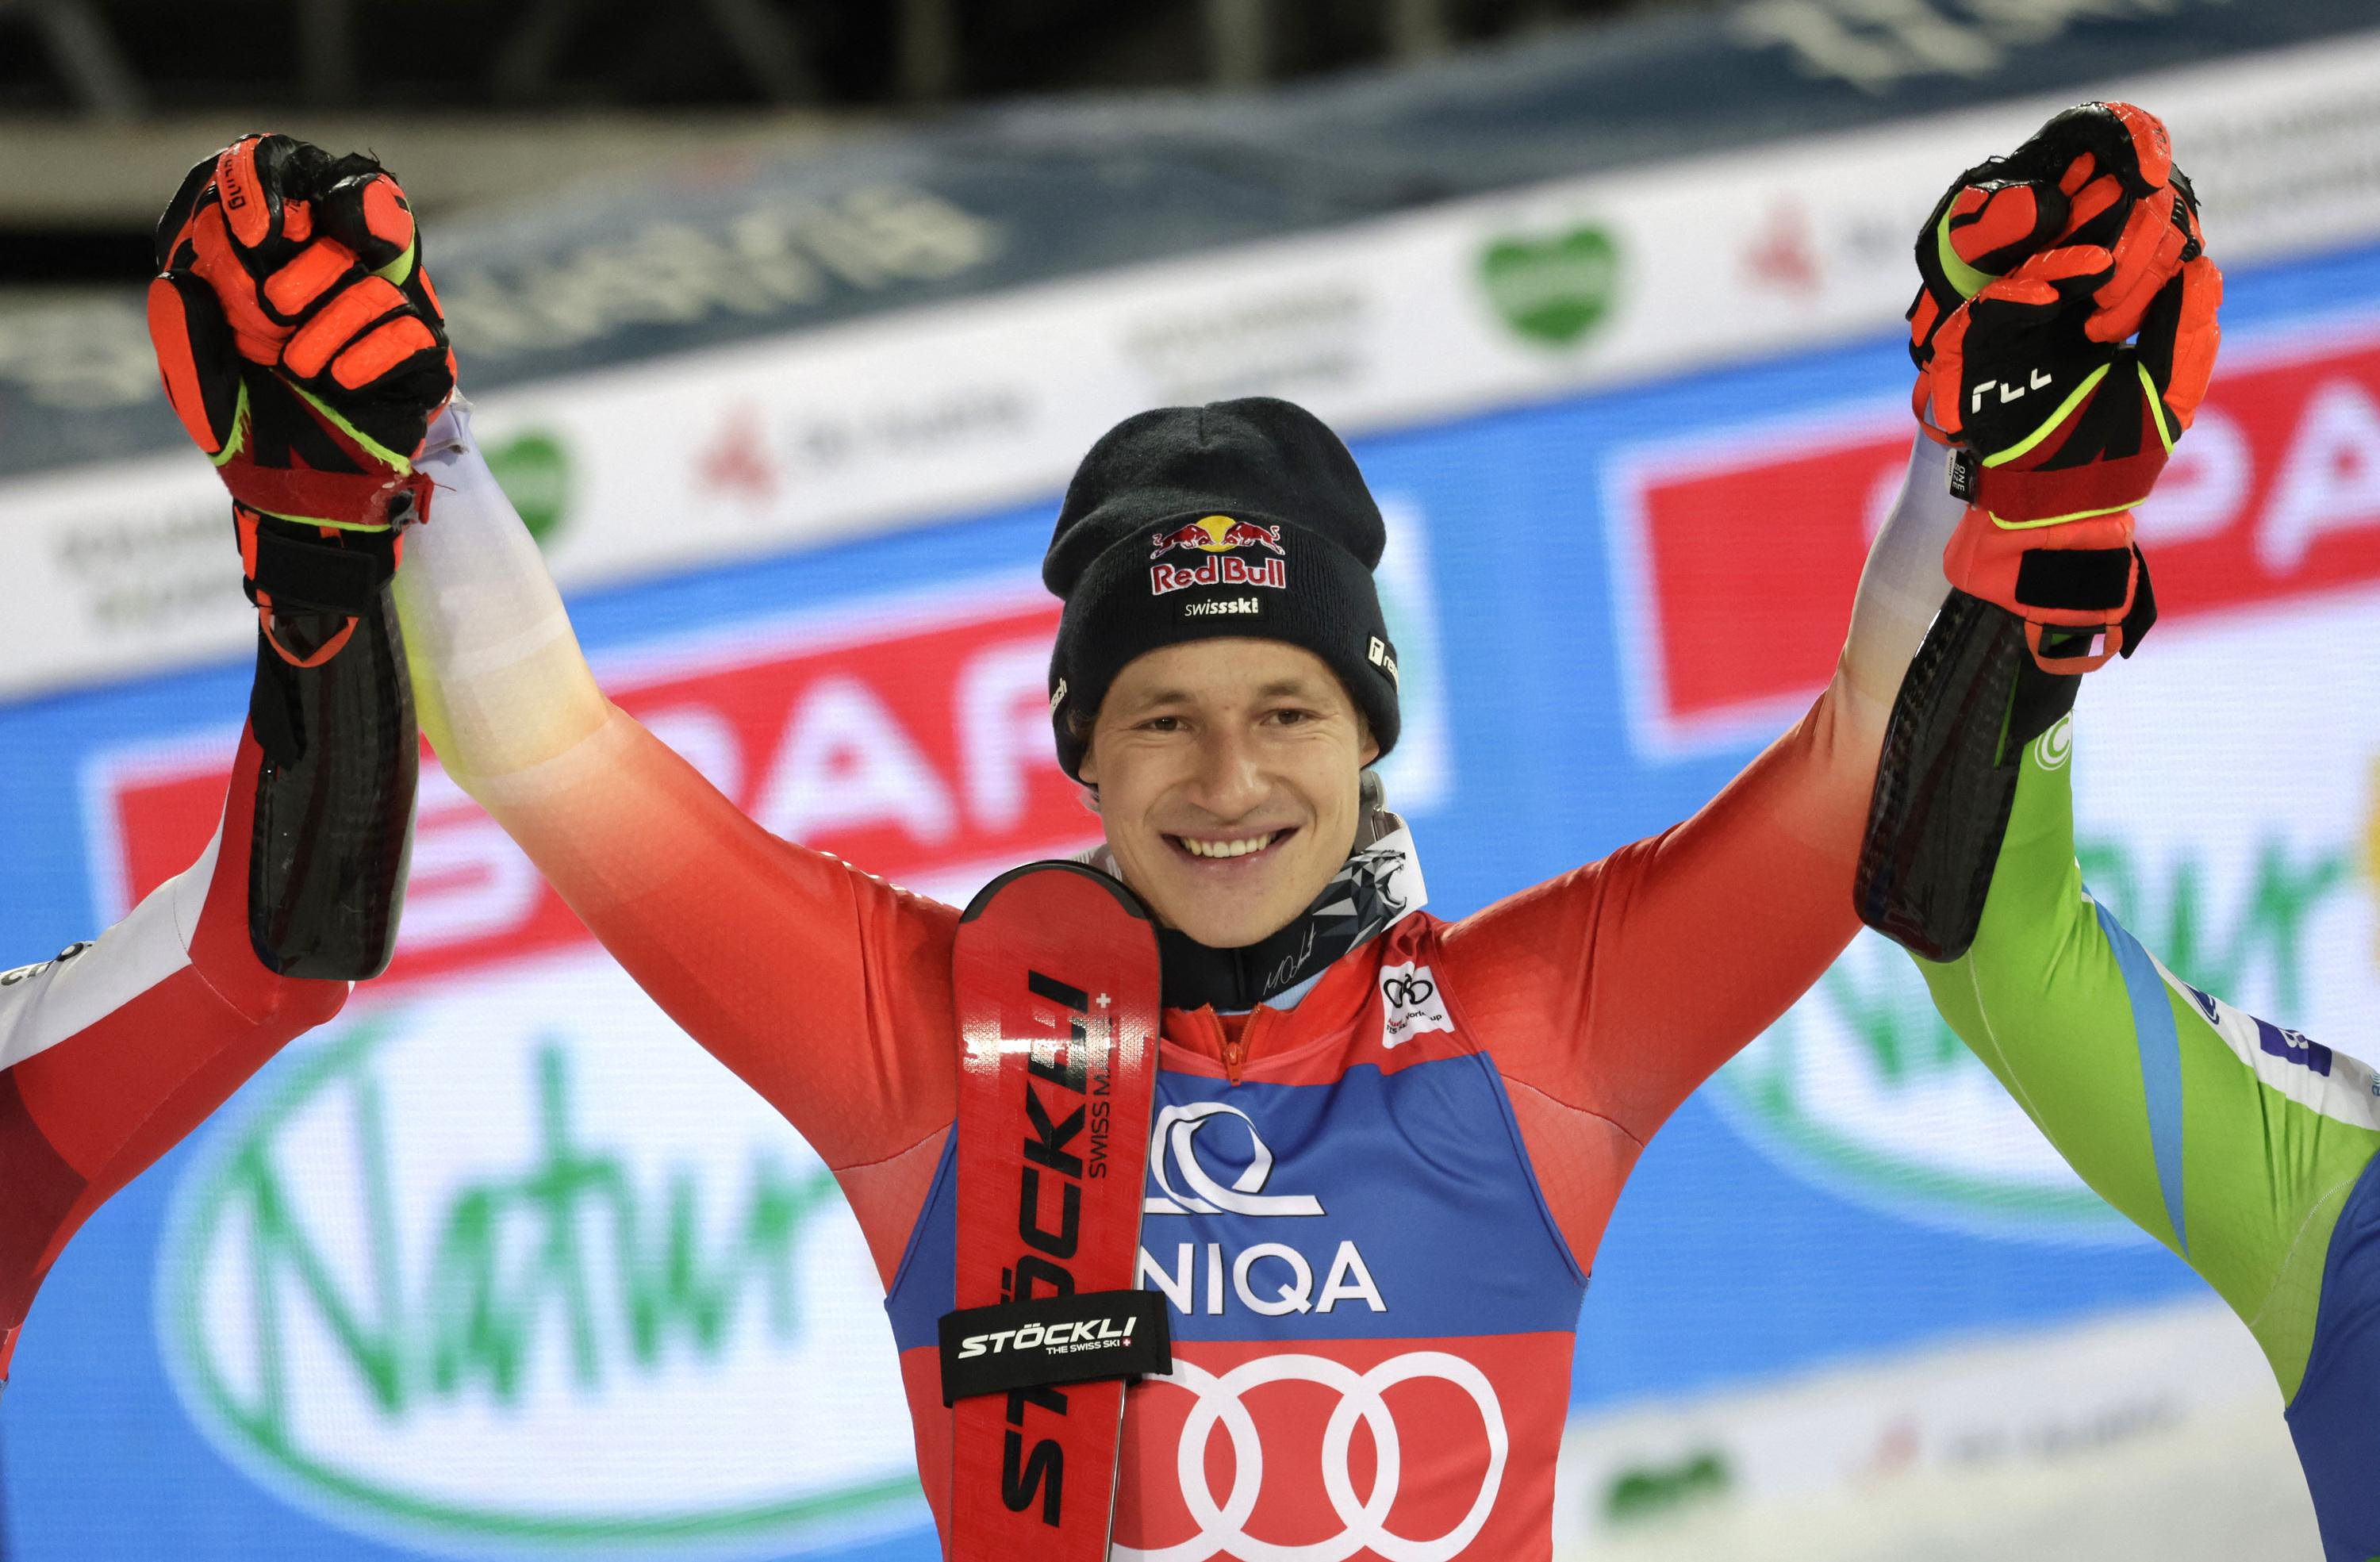 Alpine skiing: Marco Odermatt wins the Schladming giant